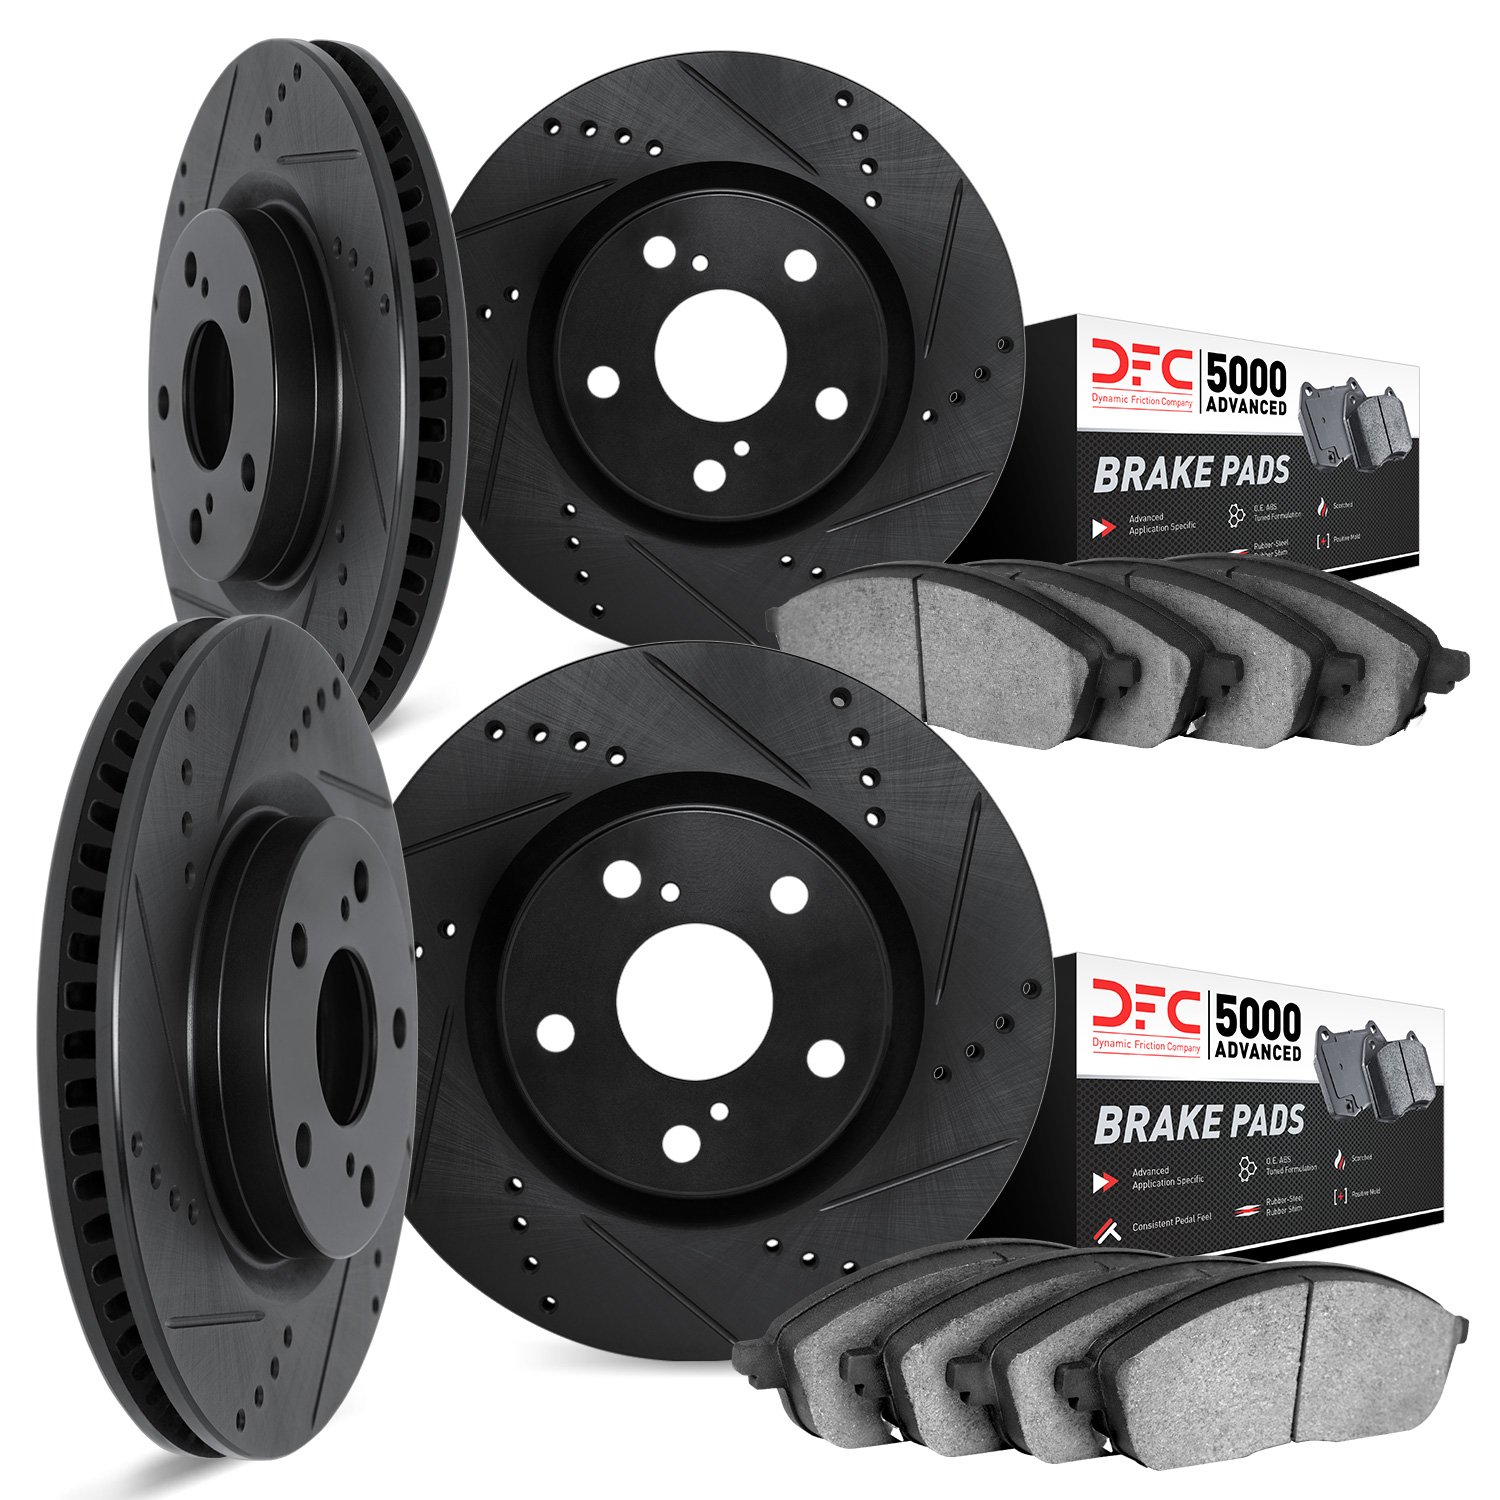 8504-54303 Drilled/Slotted Brake Rotors w/5000 Advanced Brake Pads Kit [Black], 2007-2010 Ford/Lincoln/Mercury/Mazda, Position: